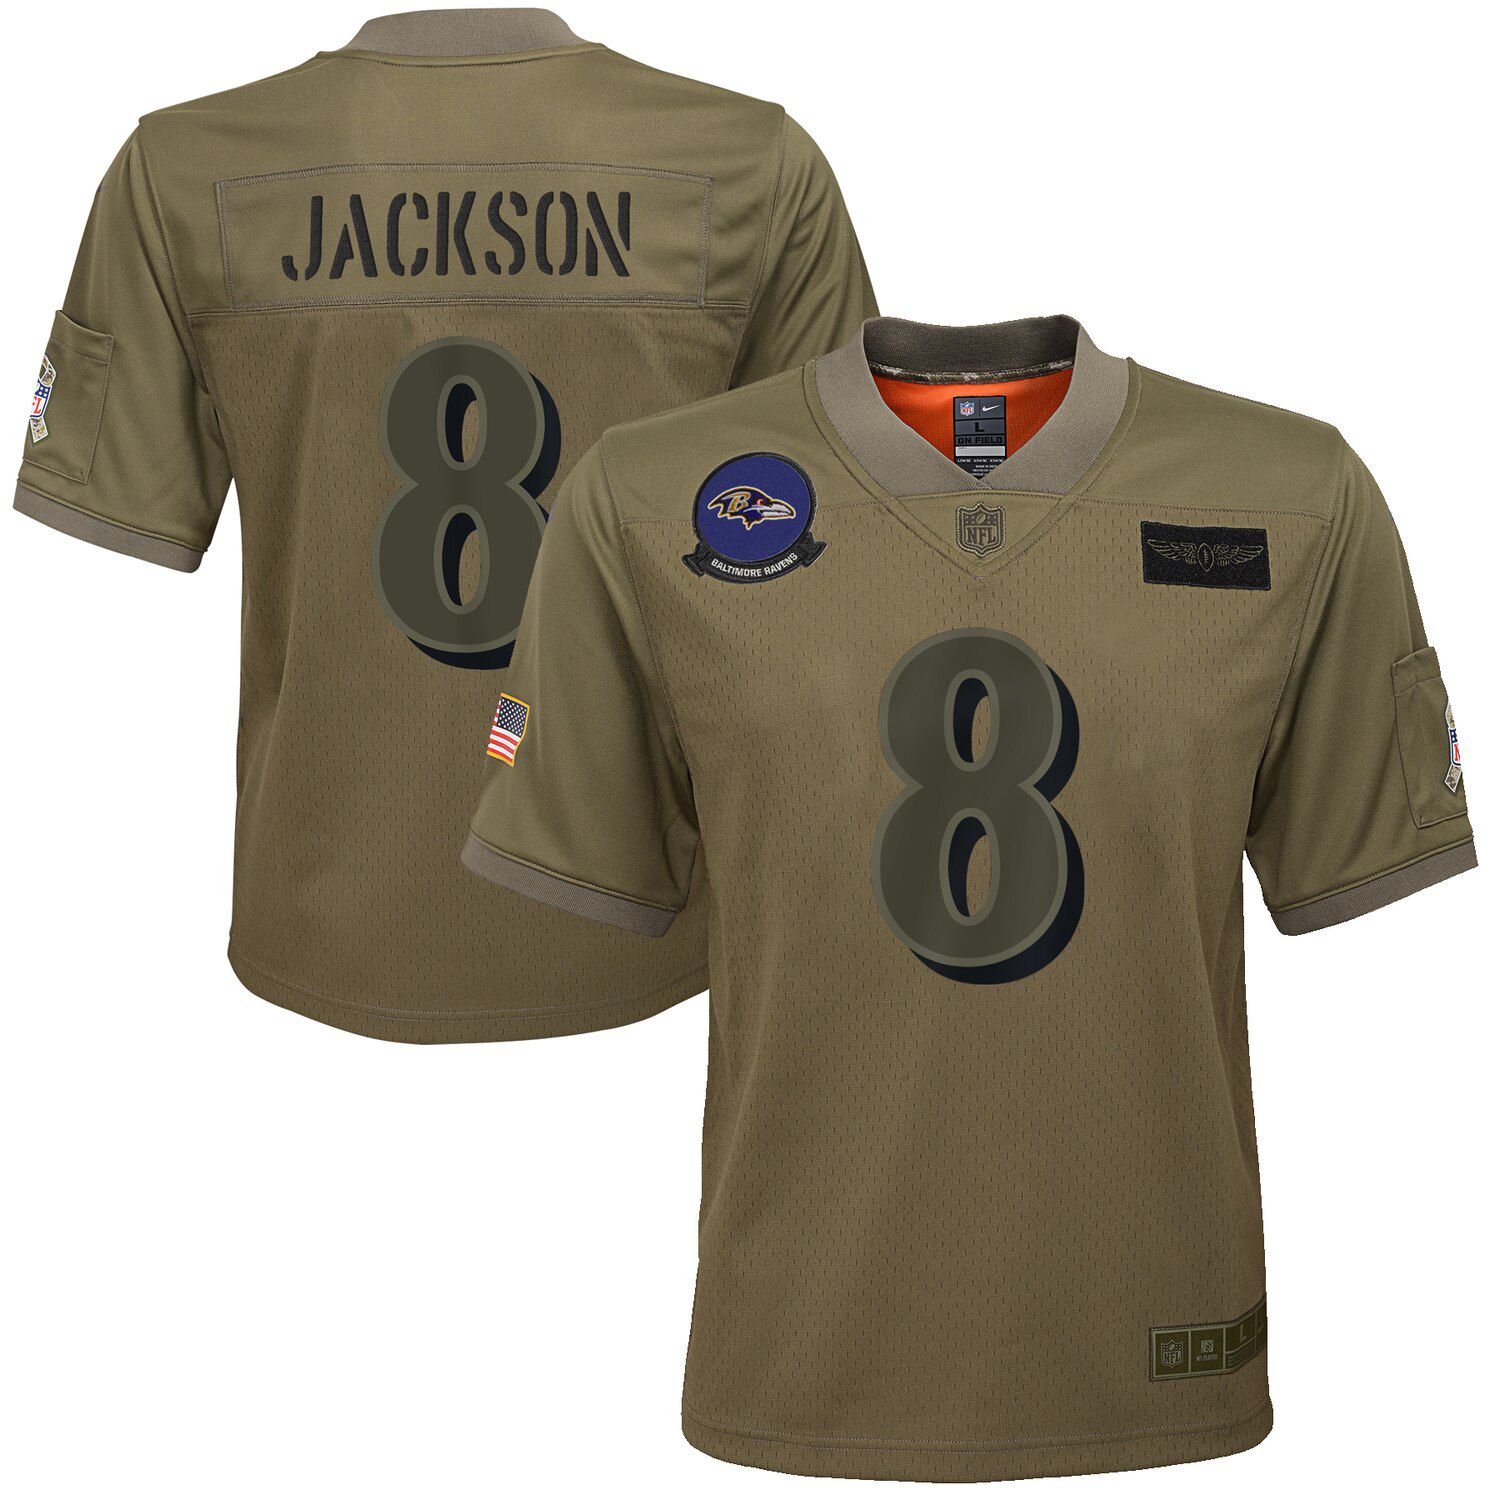 lamar jackson military jersey